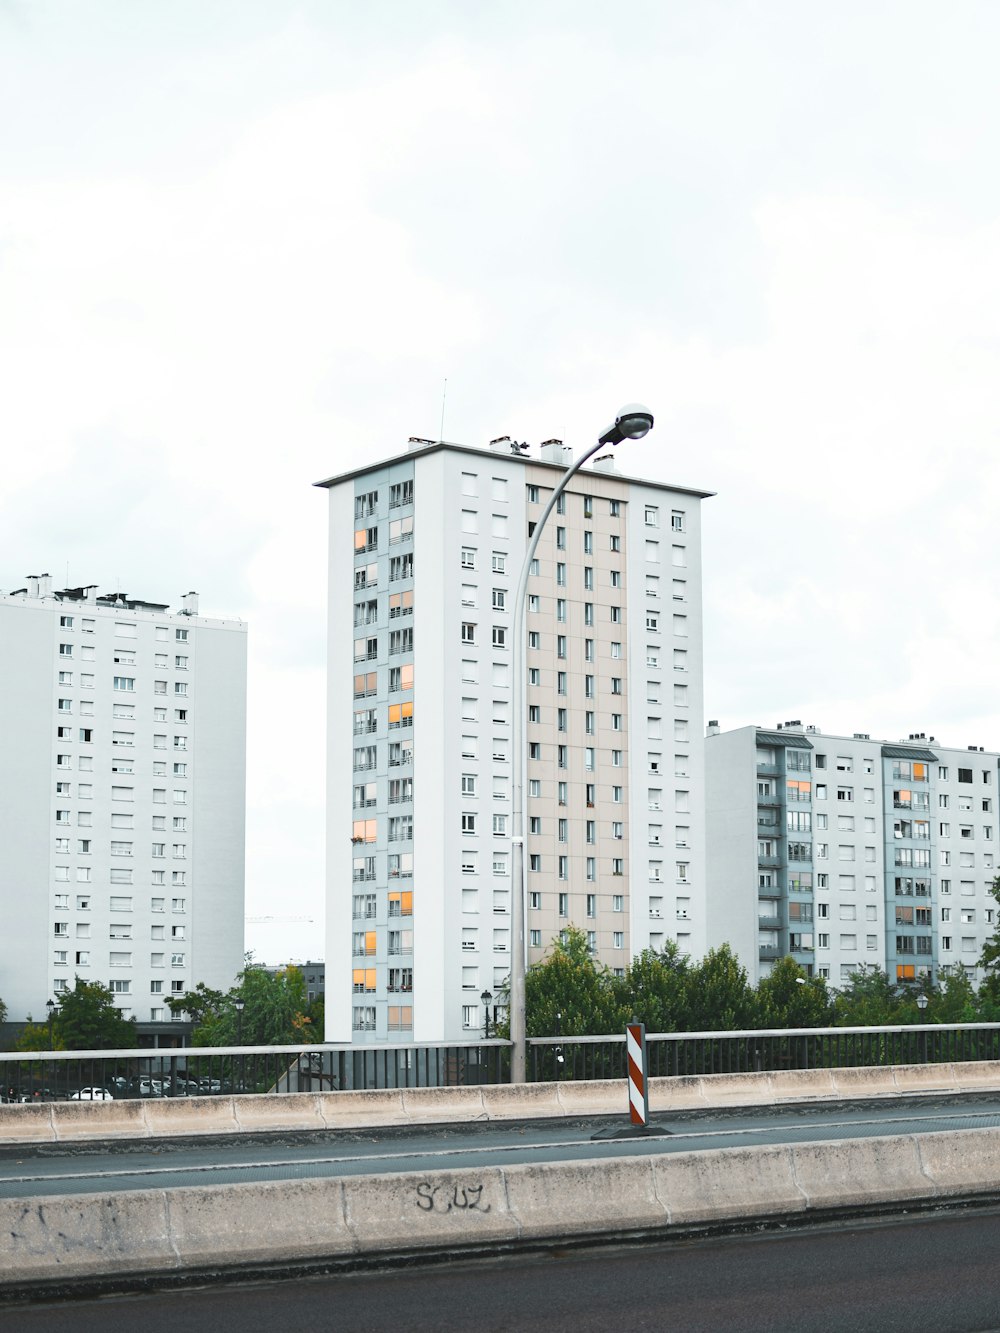 black bird flying over the city during daytime